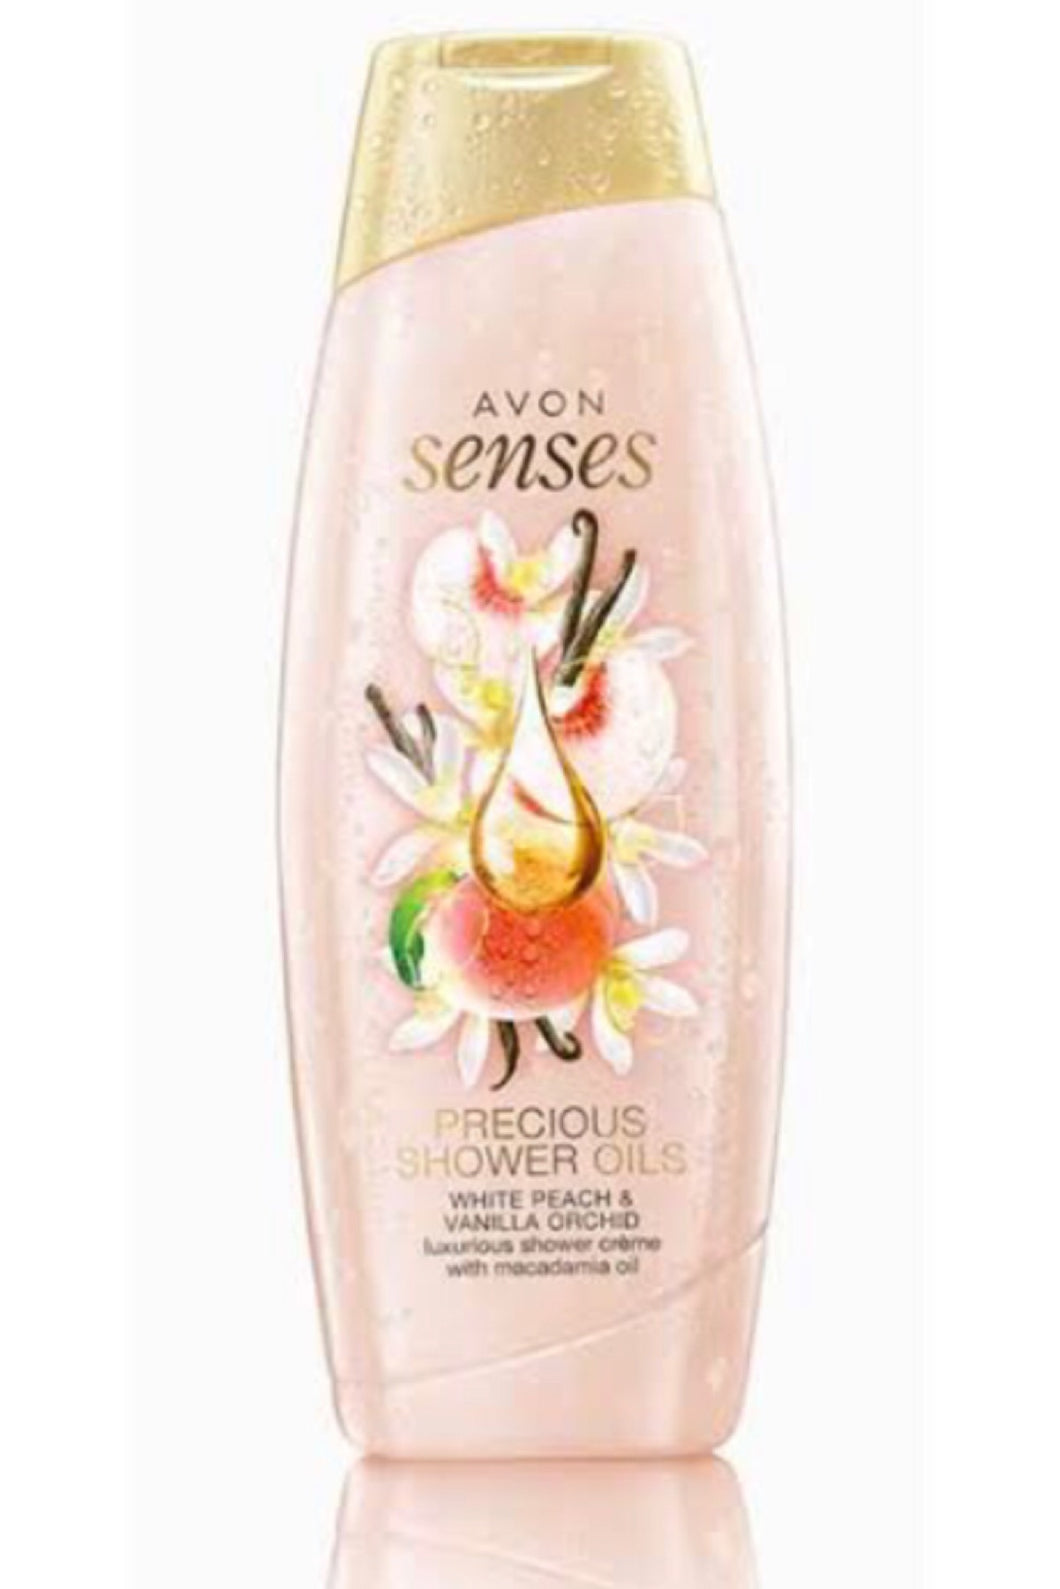 Avon Senses Precious Oils White Peach & Vanilla Orchid Shower Crème 500ml